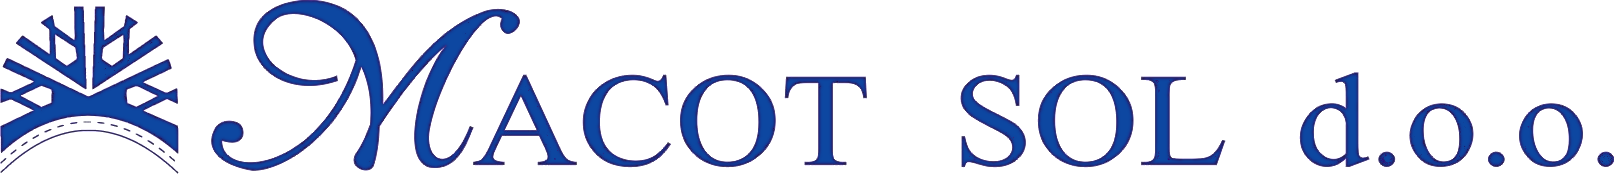 Macot Sol logo small